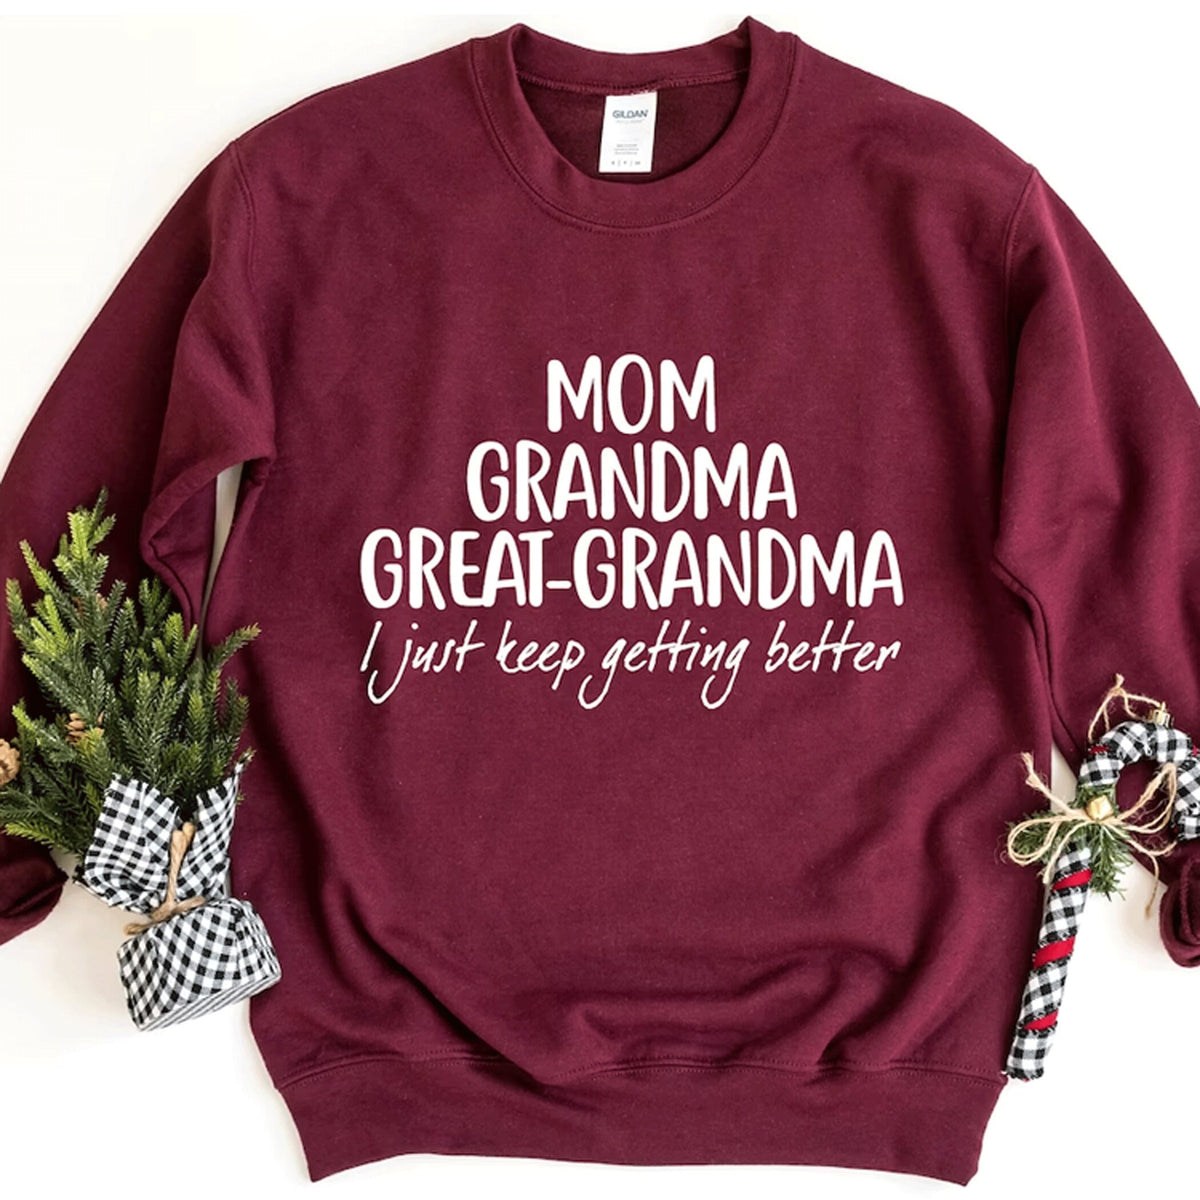 Mom Grandma Great-Grandma Sweatshirt, Mom Shirt, Floral Grandma Crewneck, Mother's Day Gift for Great-Grandma, Pregnancy Announcement Shirt